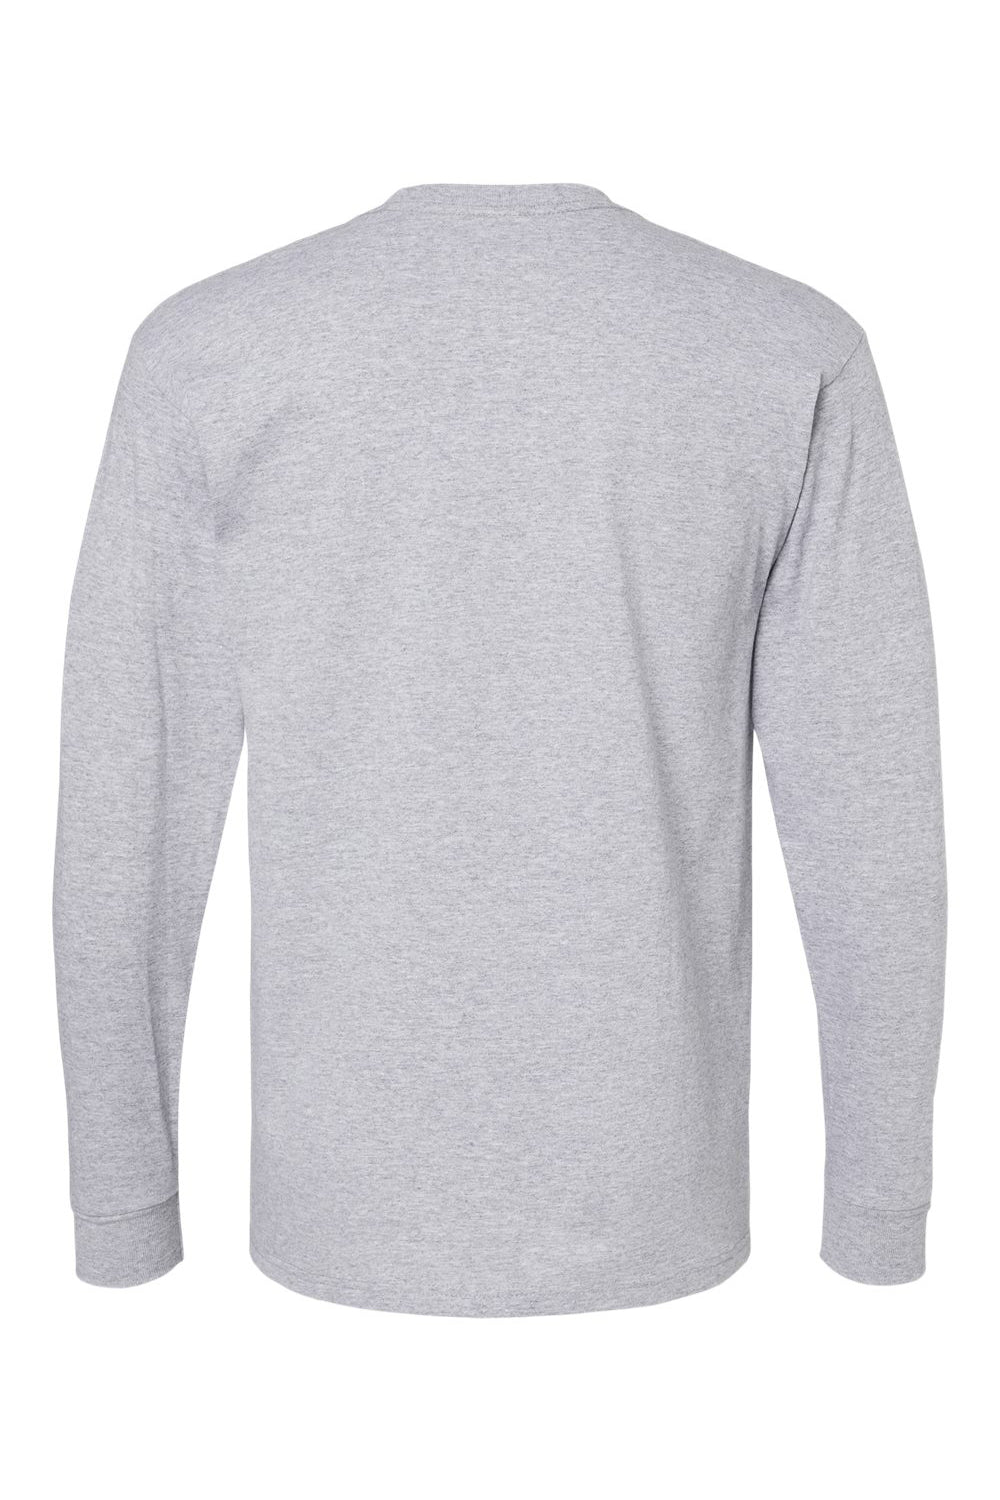 M&O 4820 Mens Gold Soft Touch Long Sleeve Crewneck T-Shirt Athletic Grey Flat Back